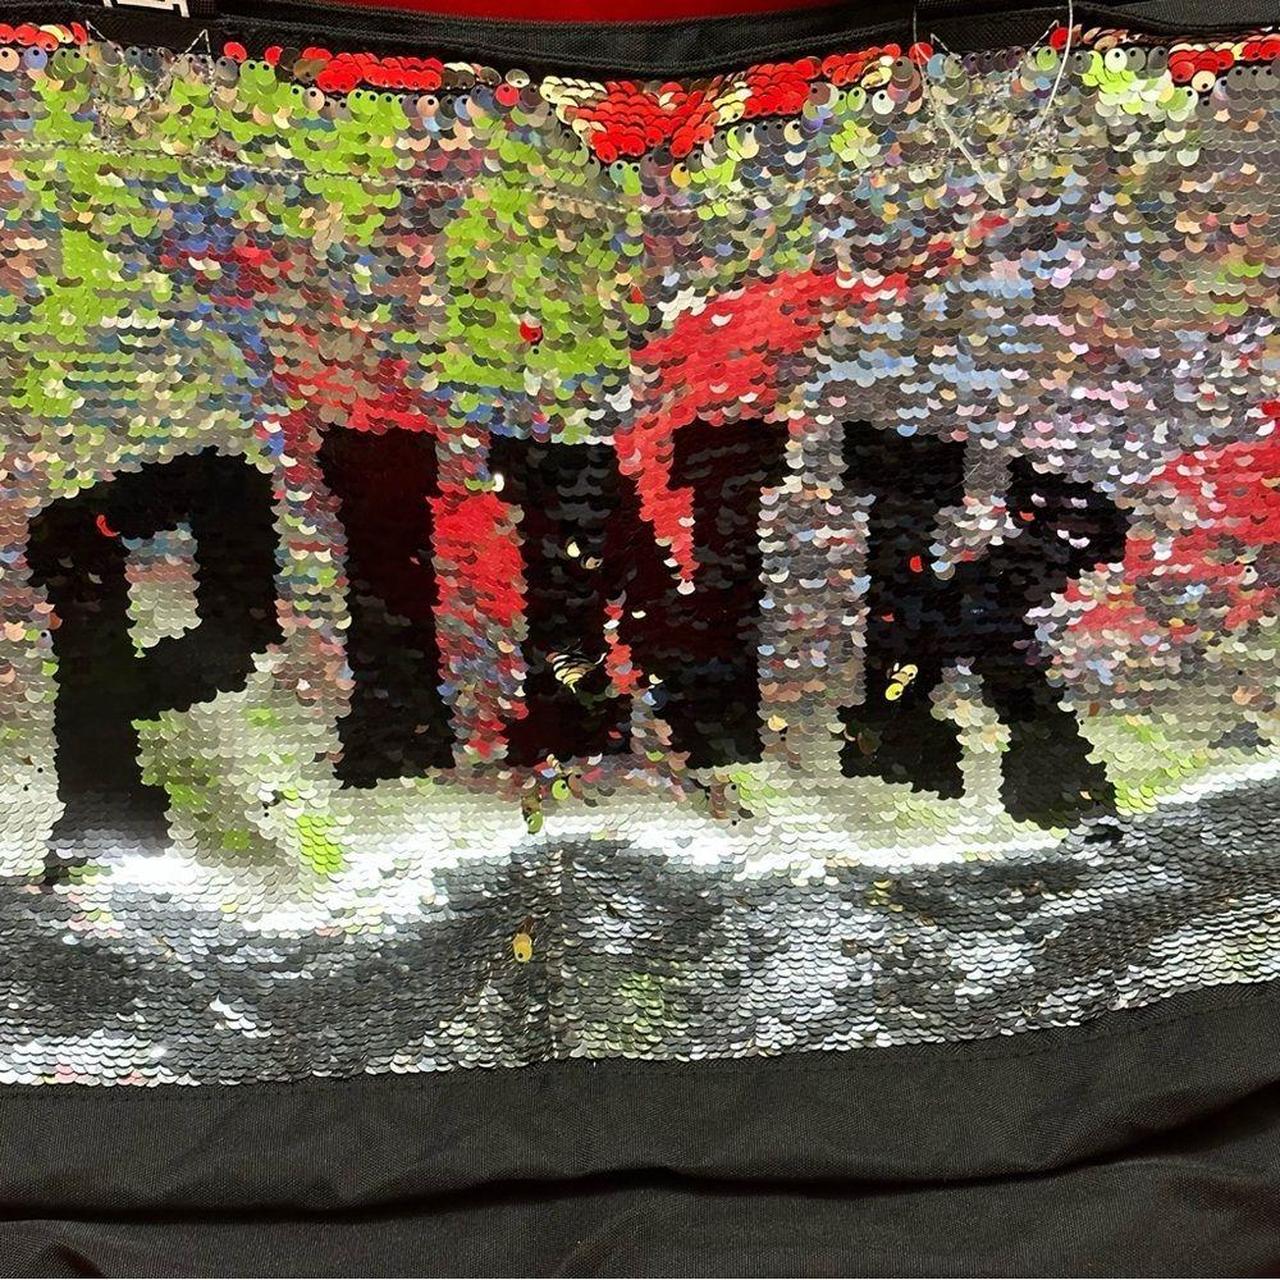 Nwt pink vs tote bag Super cute PINK NYC bling tote - Depop